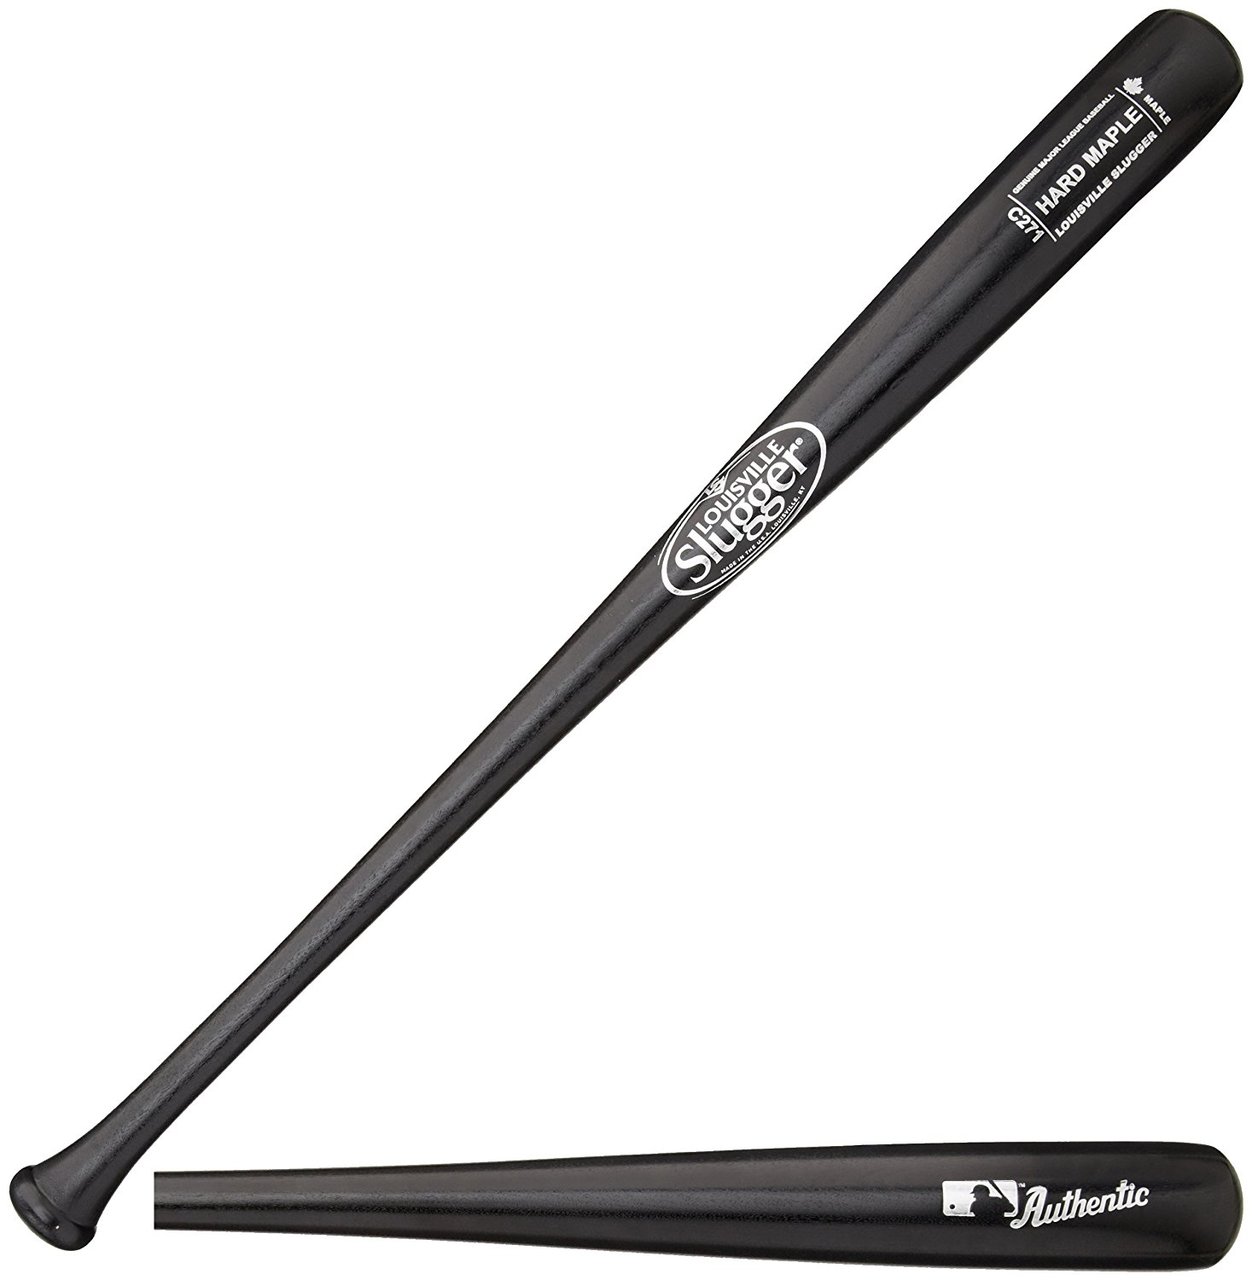  CLOSEOUT Louisville Slugger I13 Hard Maple Wood Baseball Bat  WBHM14-13CBN - $19.99